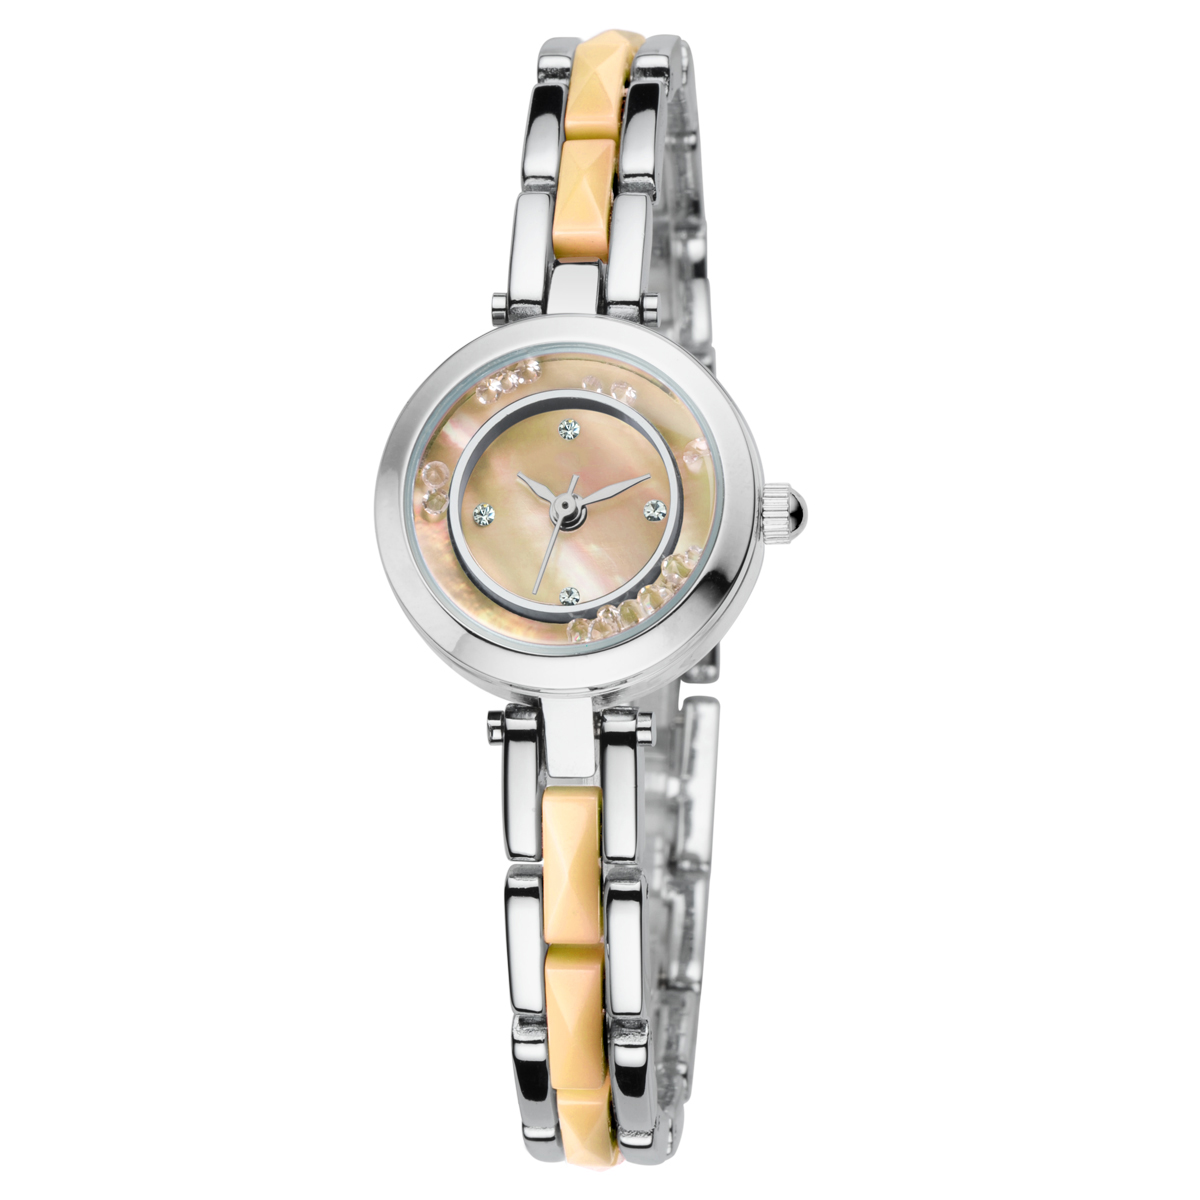 #2509 Wrist watch fashion Bracelet Chain Crystal Women Quartz Watch - yellow watch